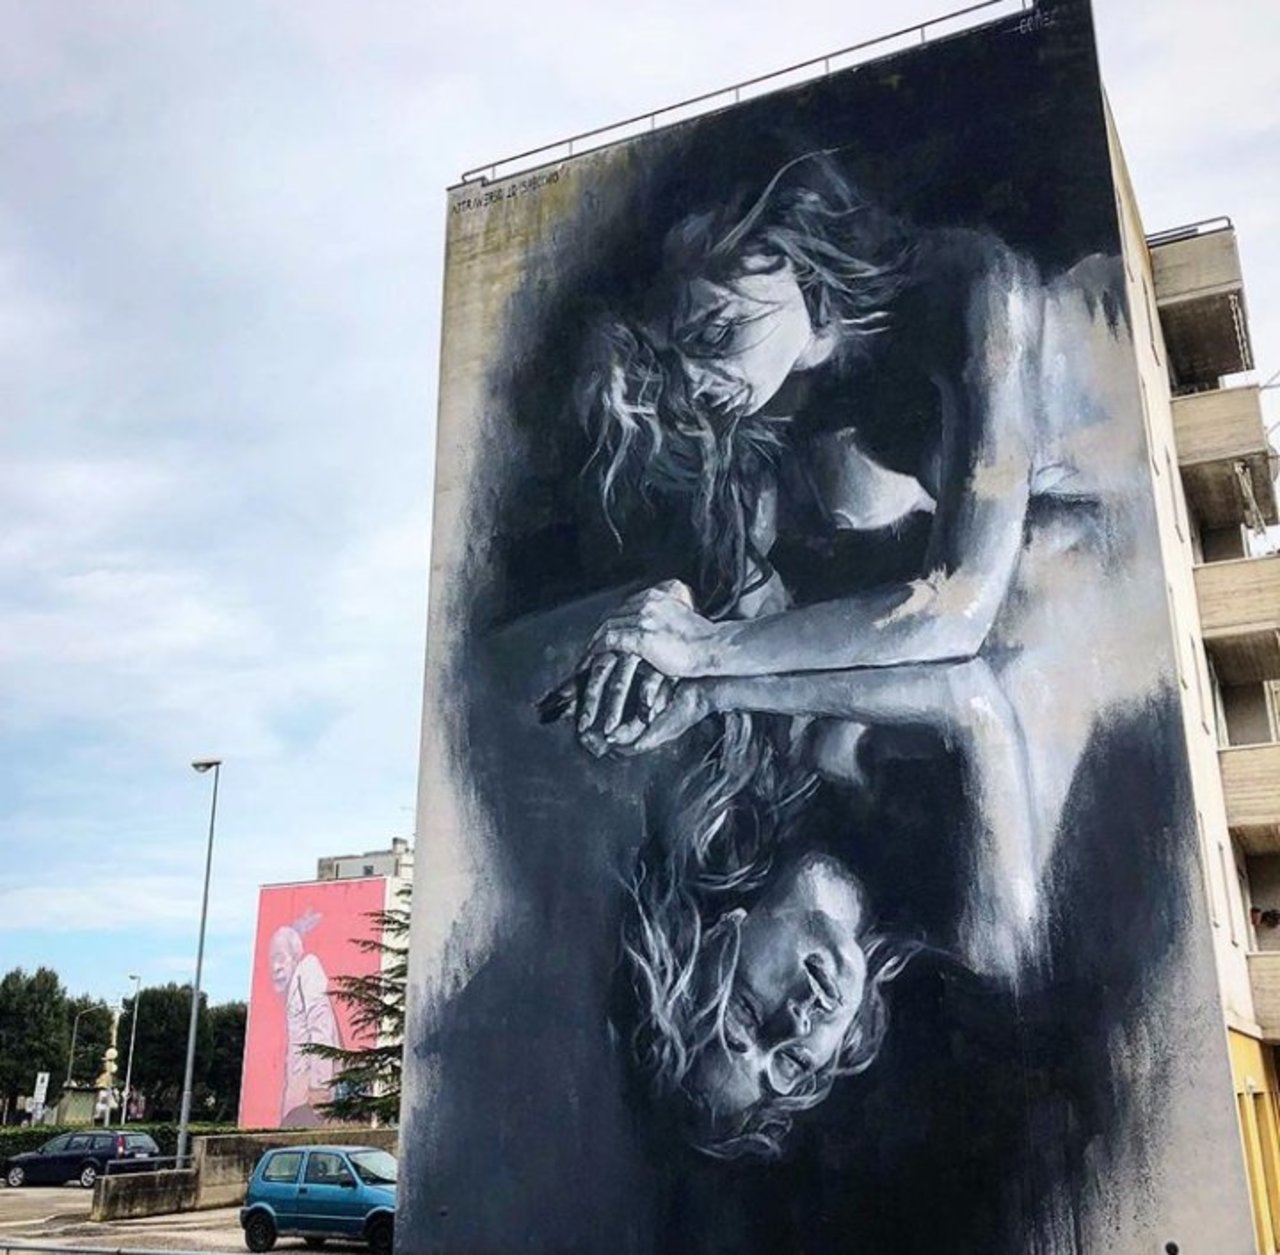 Black and Grey... #streetart #graffiti #muralart #mural #art https://t.co/WzooqbNeN2